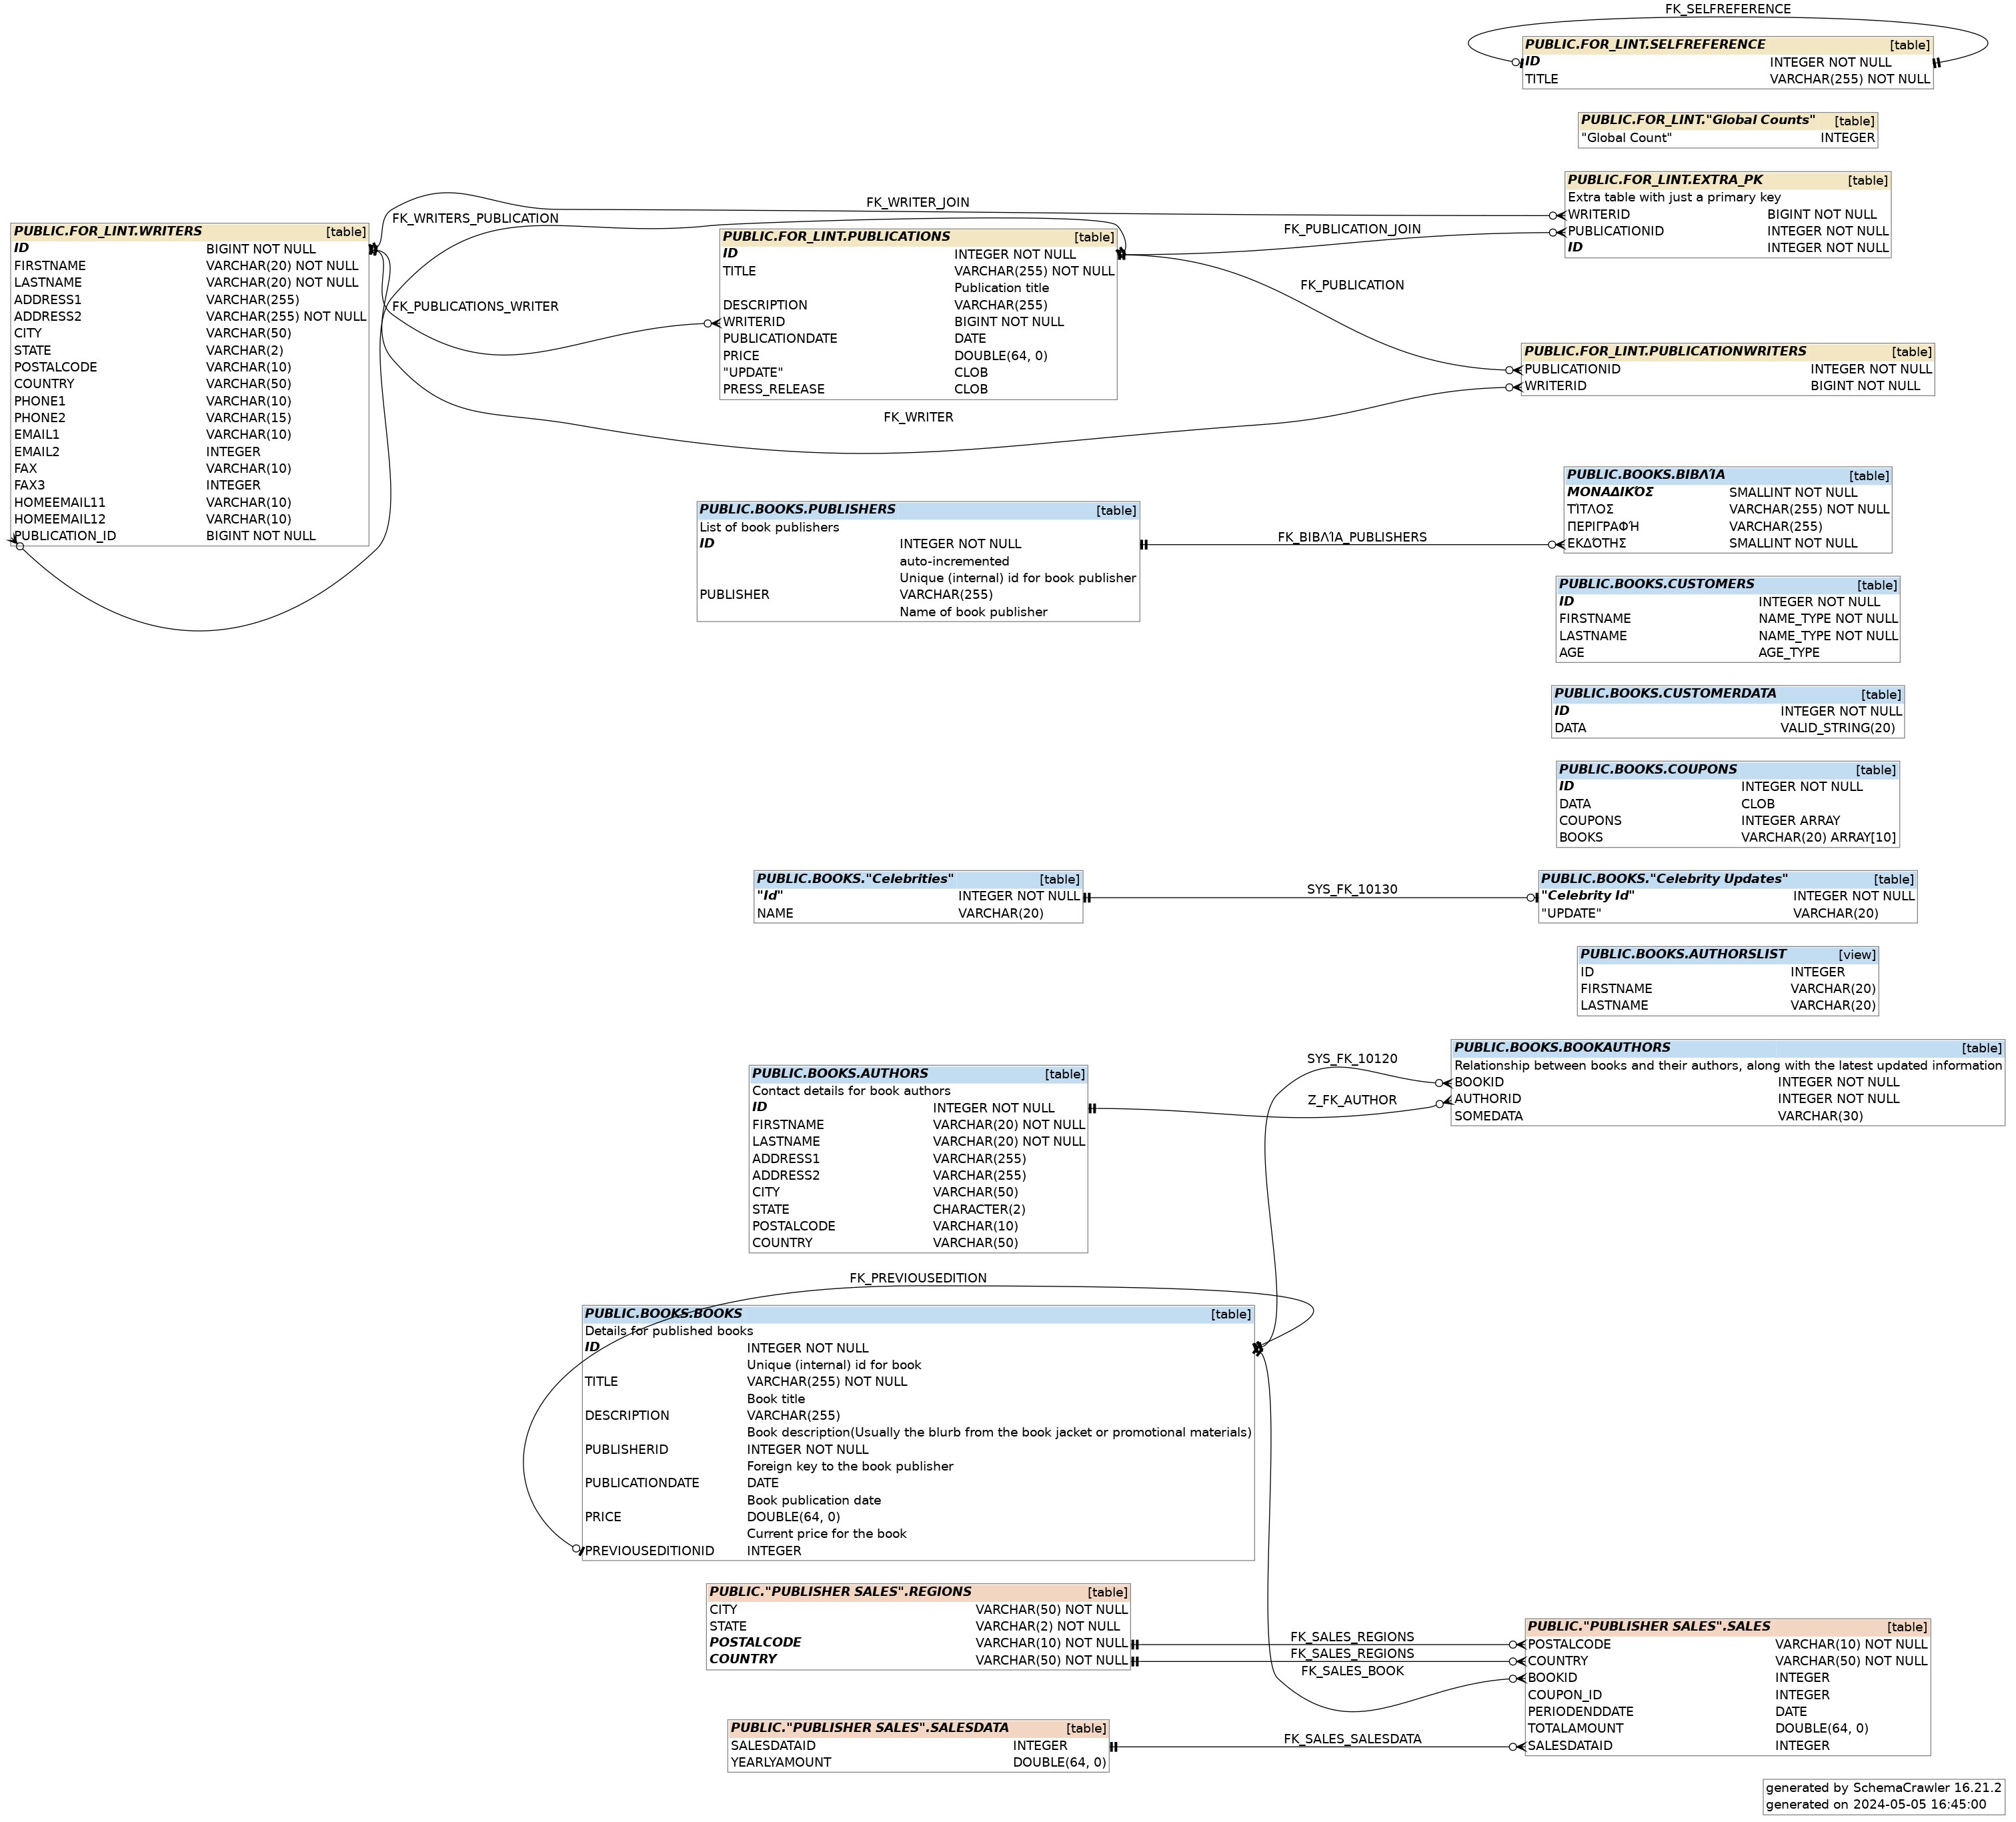 An example of a SchemaCrawler database diagram